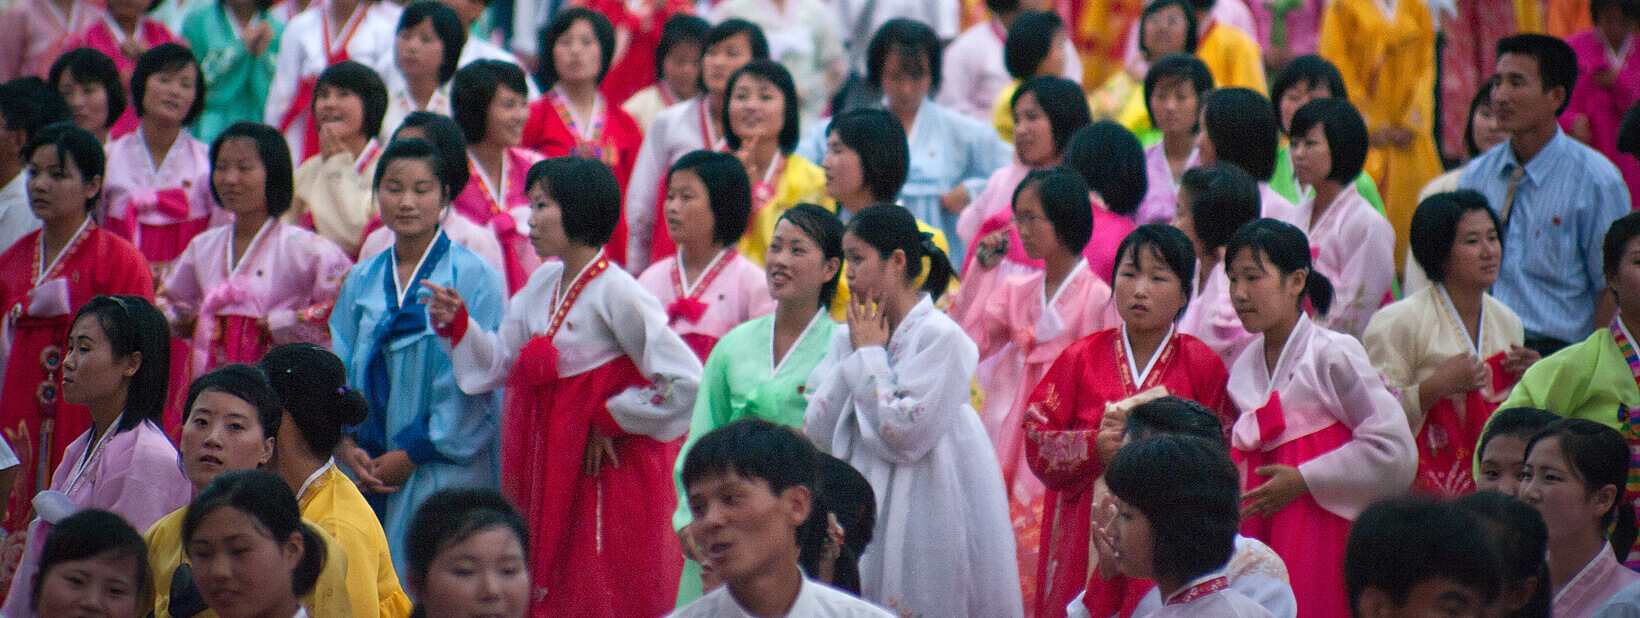 National Day mass dance in Pyongyang (Photo: Jen Morgan/Flickr)